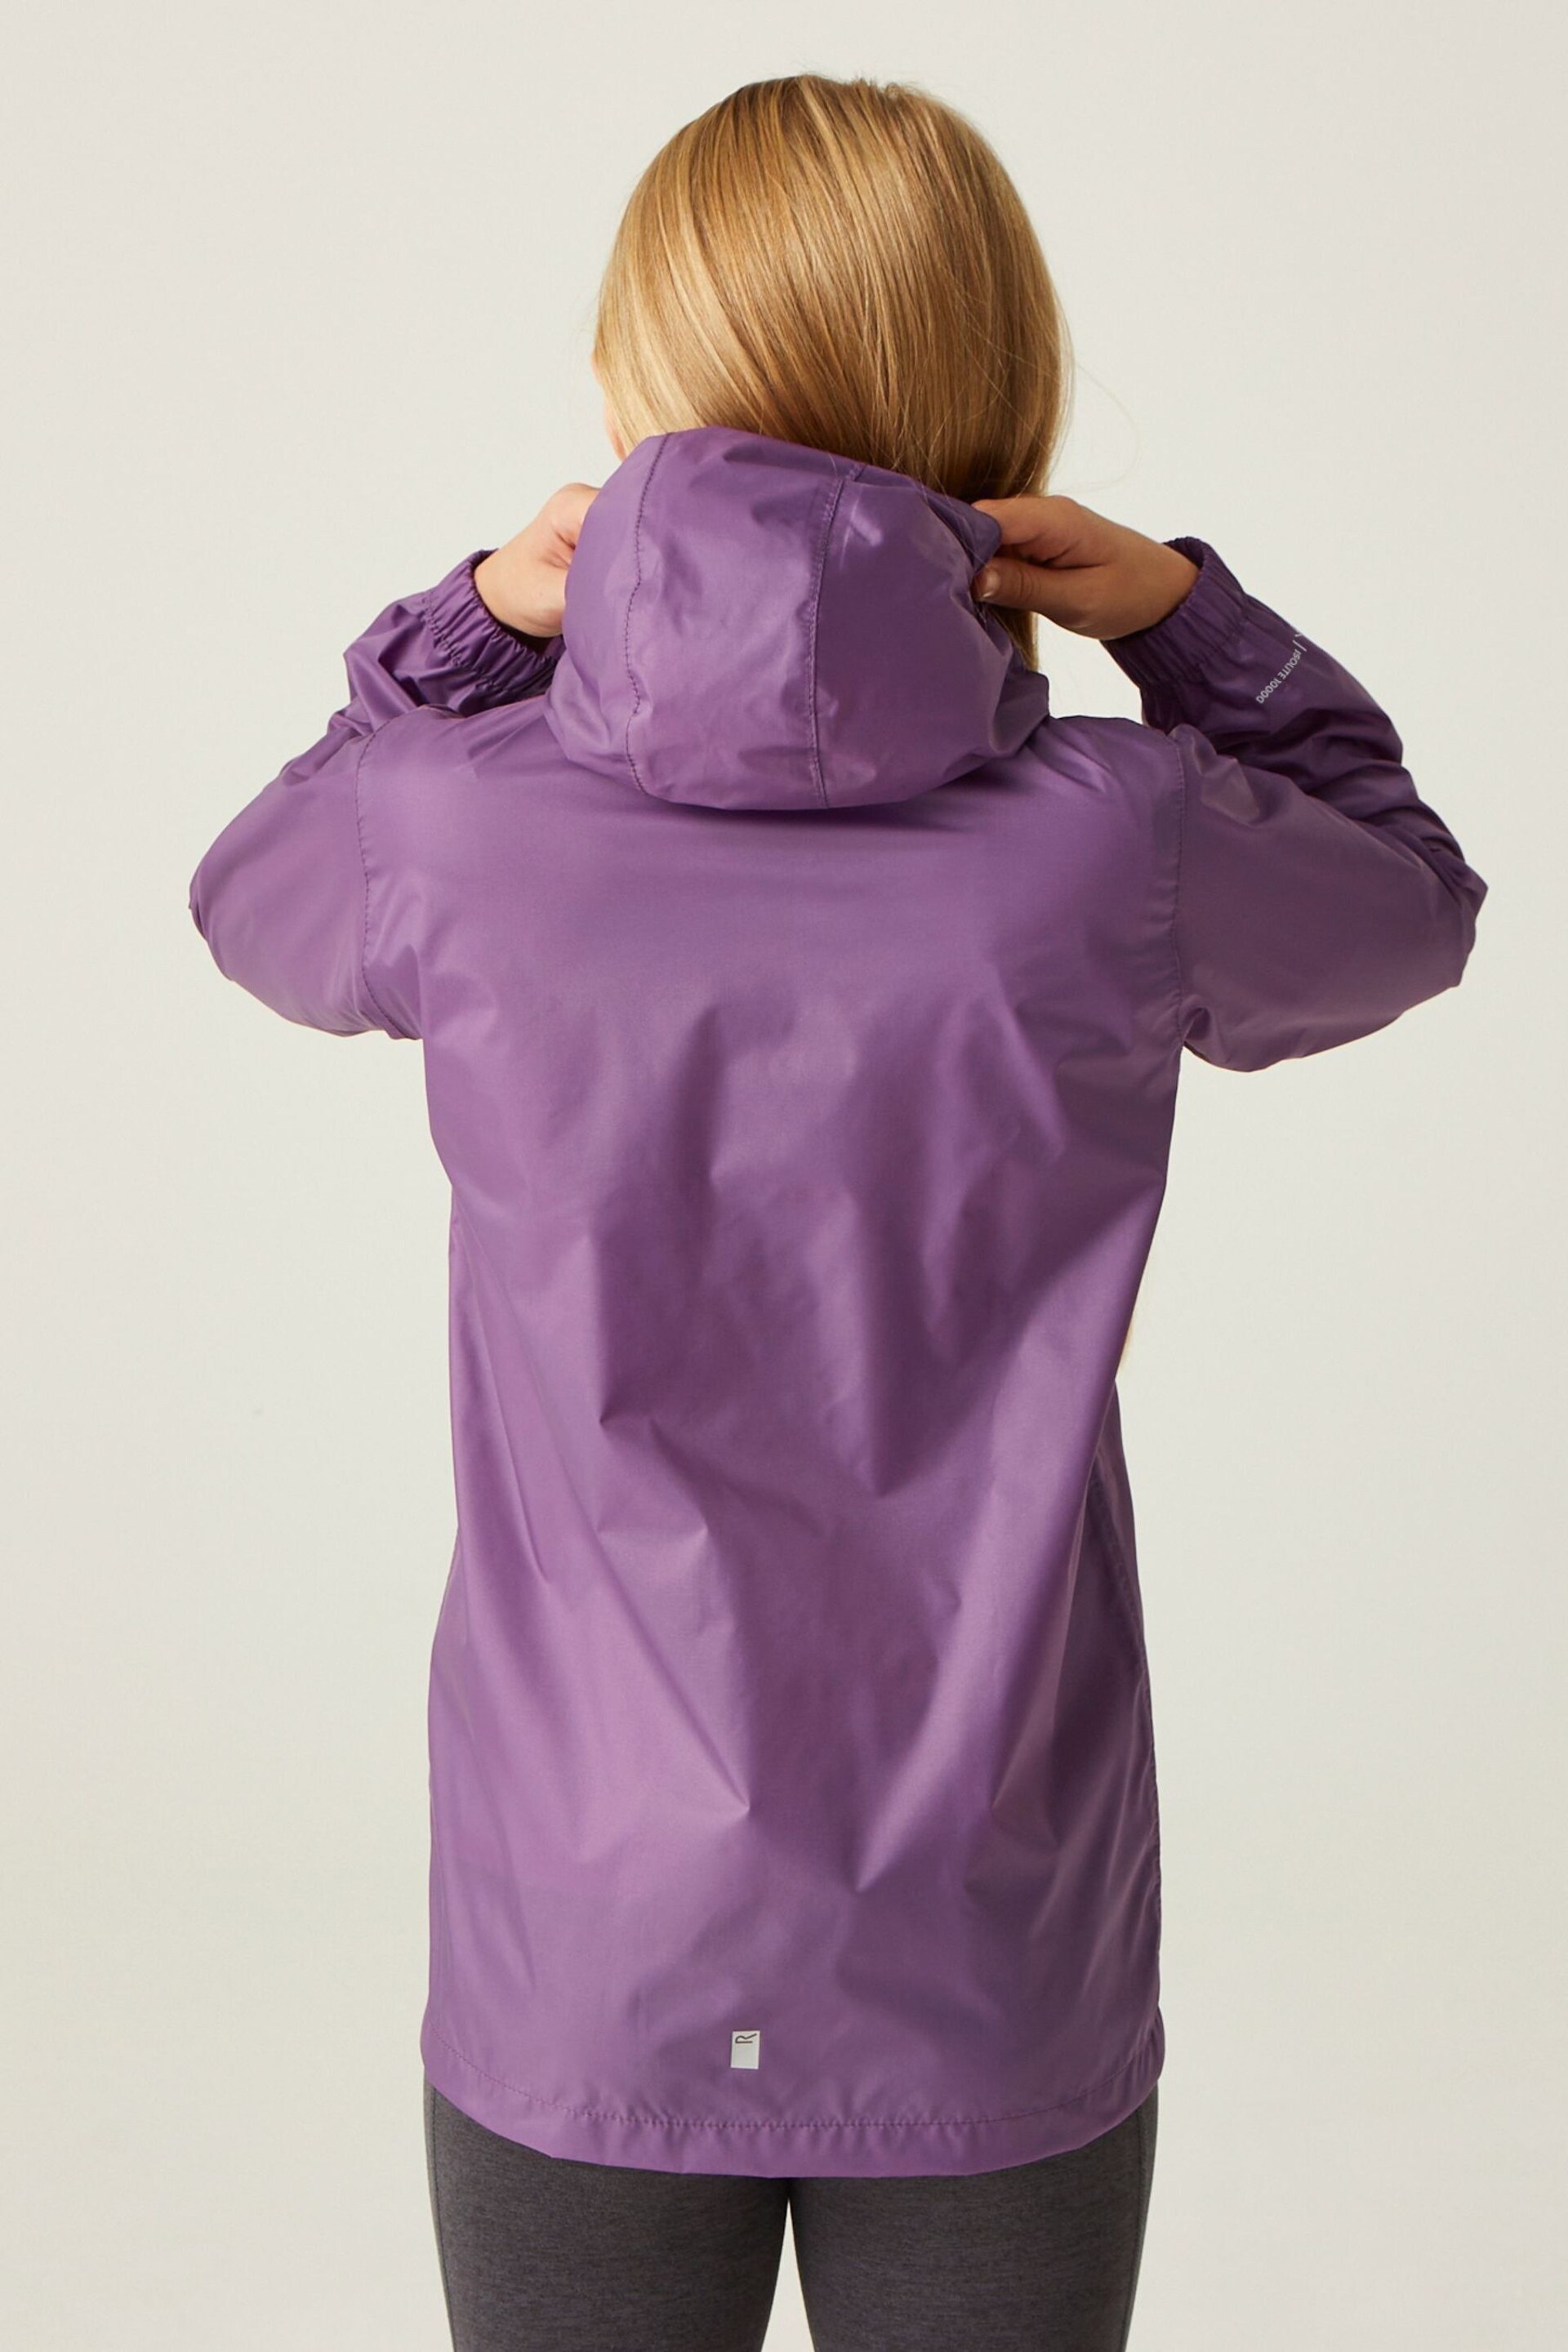 Regatta Purple Pack It III Waterproof Jacket - Image 2 of 8